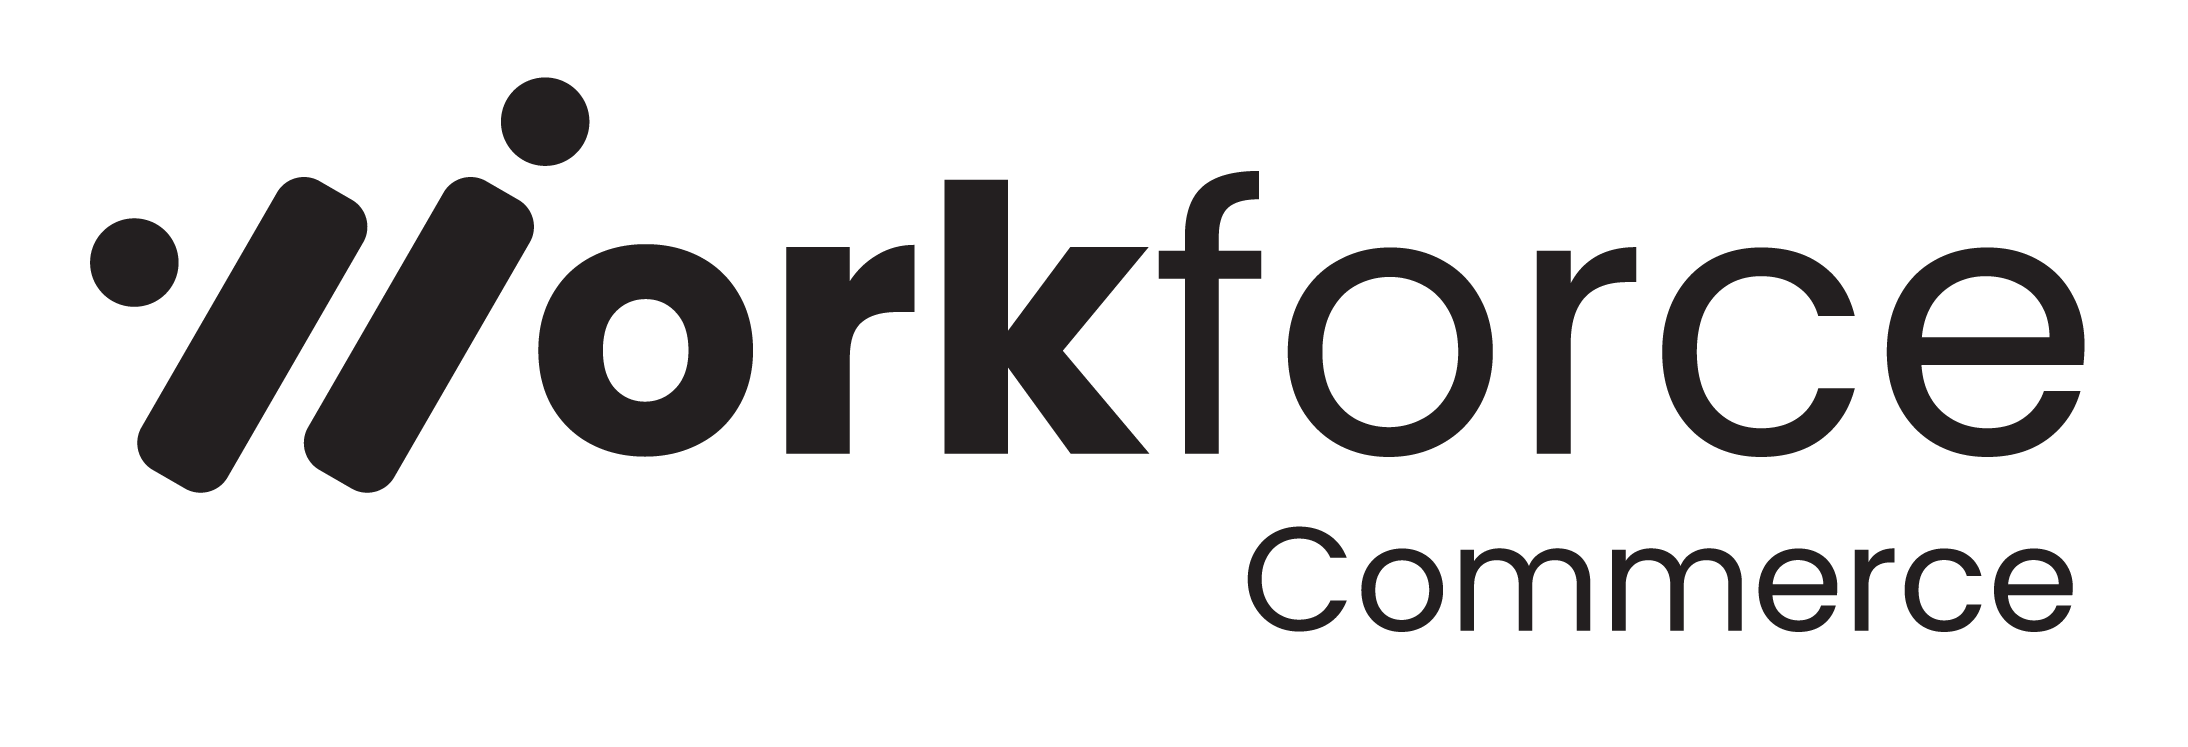 Workforce Commerce